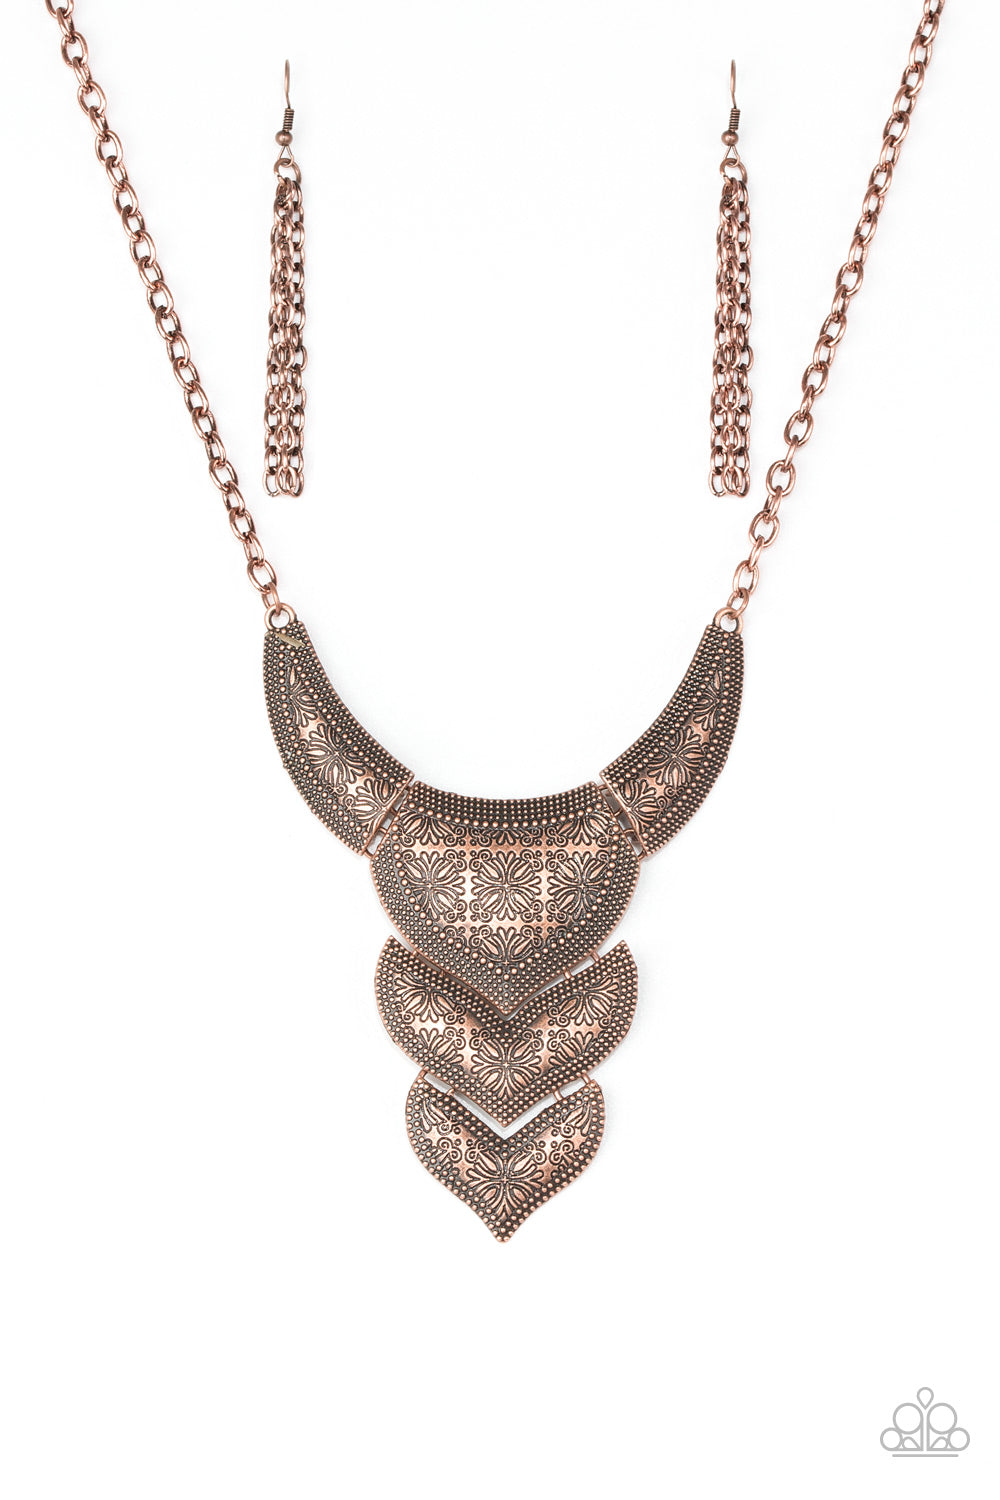 Texas Temptress - Copper necklace